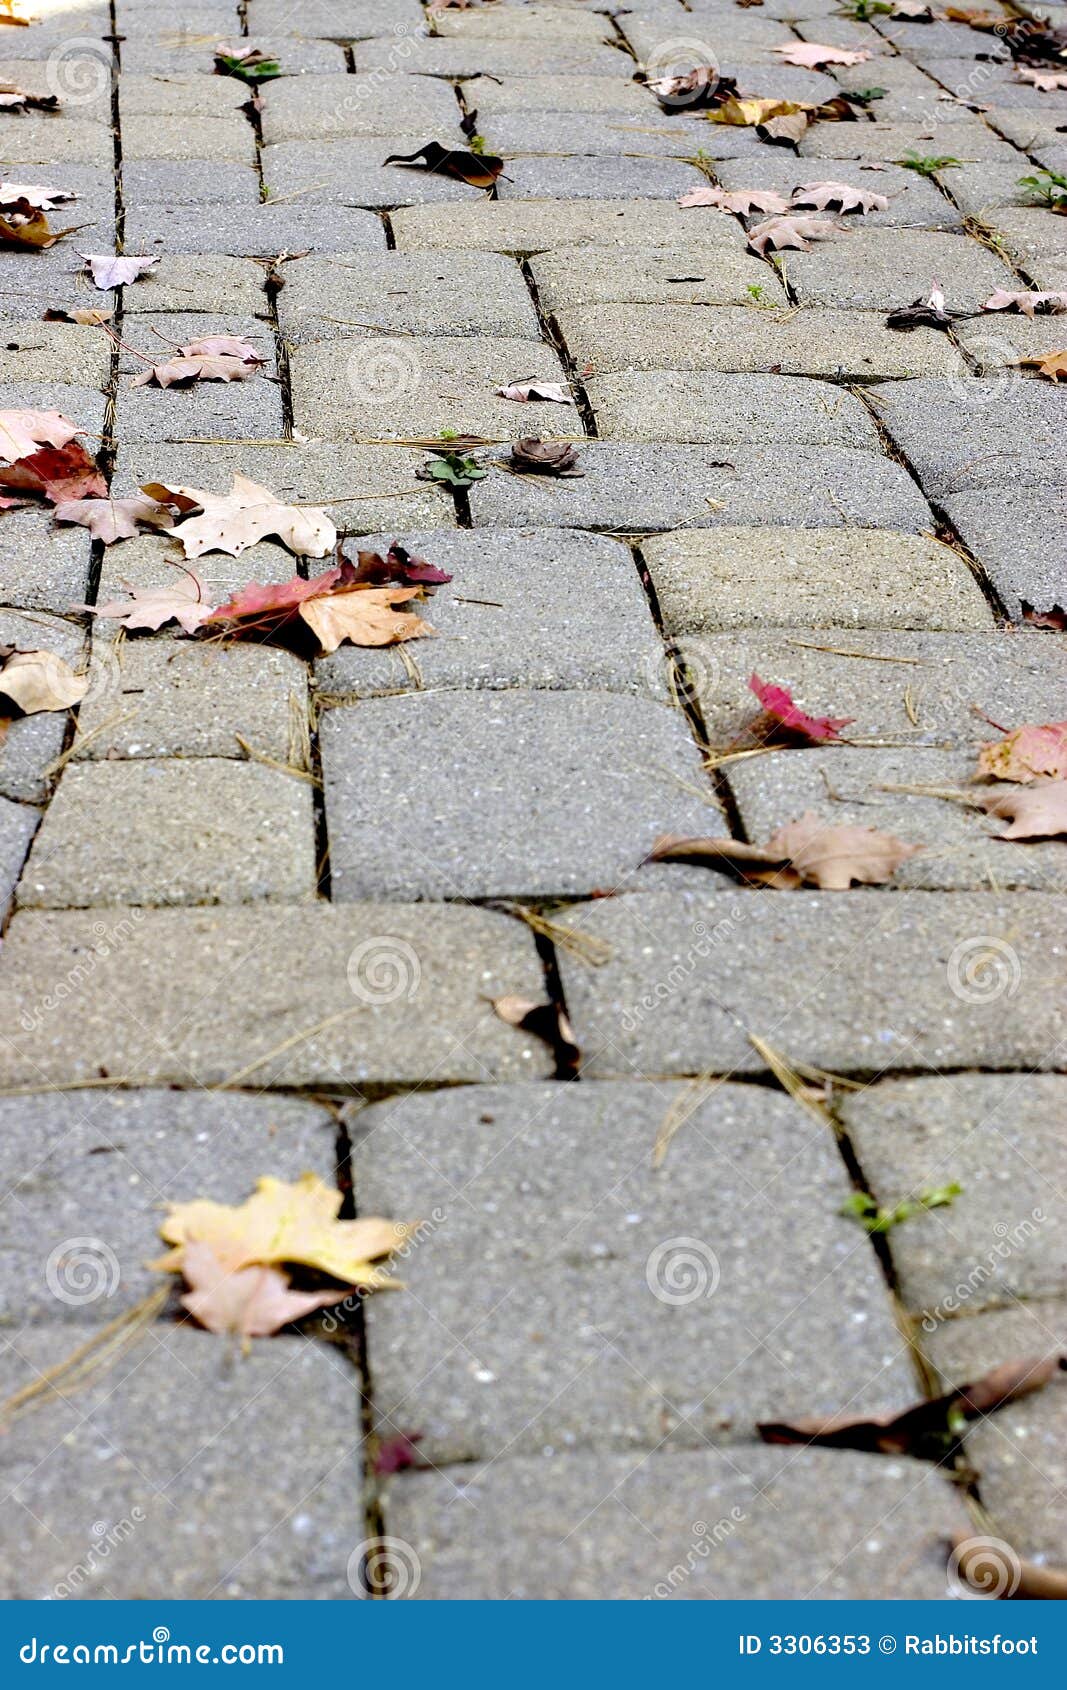 autumn cobblestone walkway